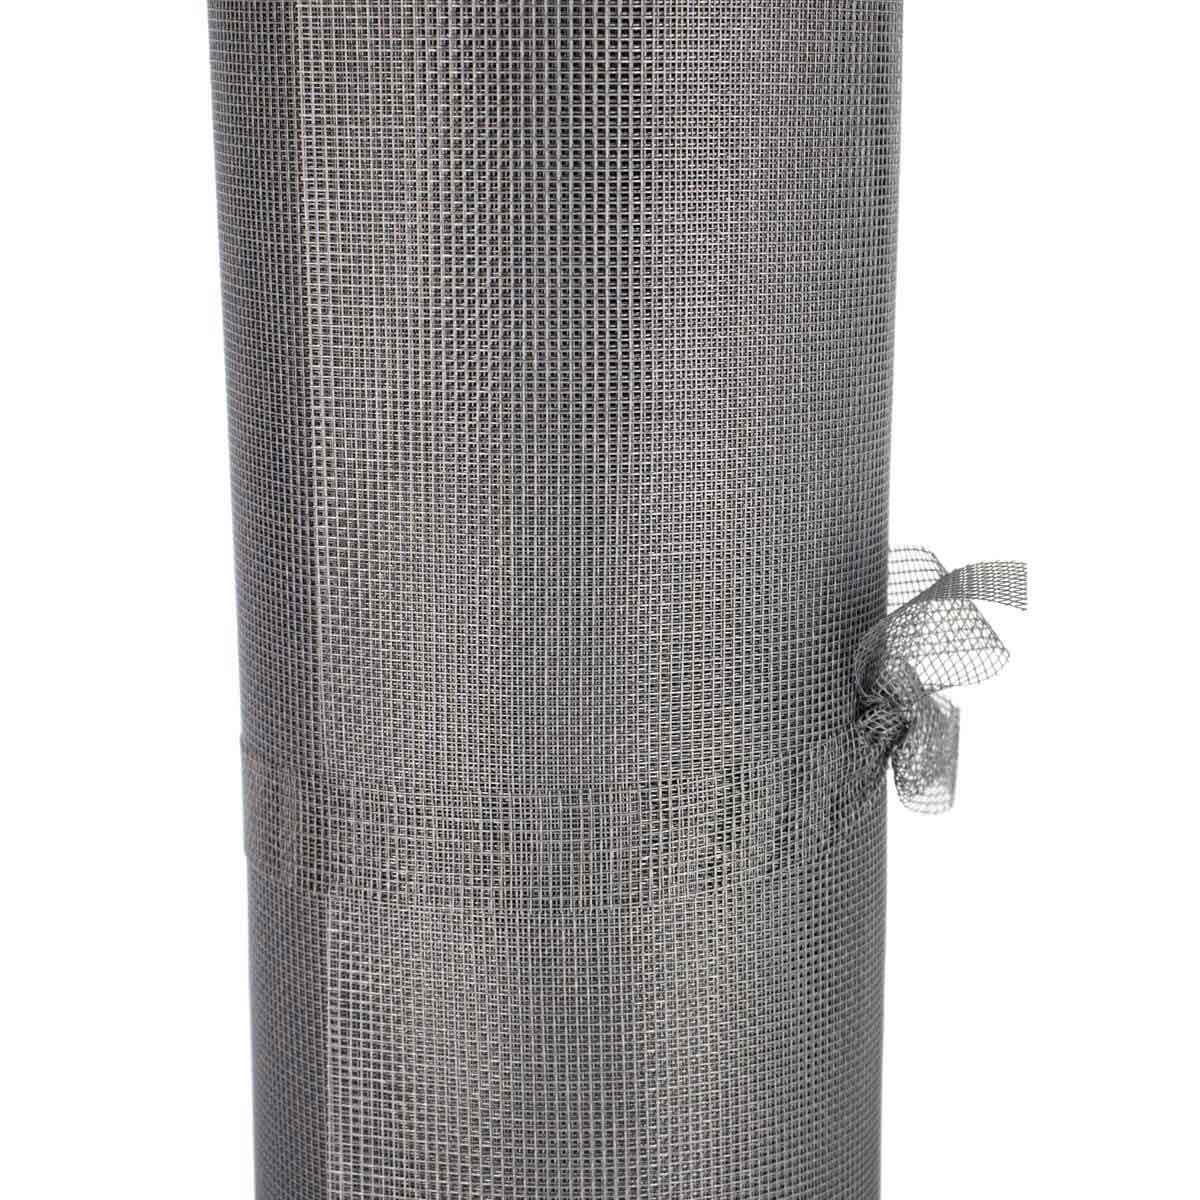 ⇒ Tela mosquitera fibra vidrio minirollo 1,20 x 5 metros gris